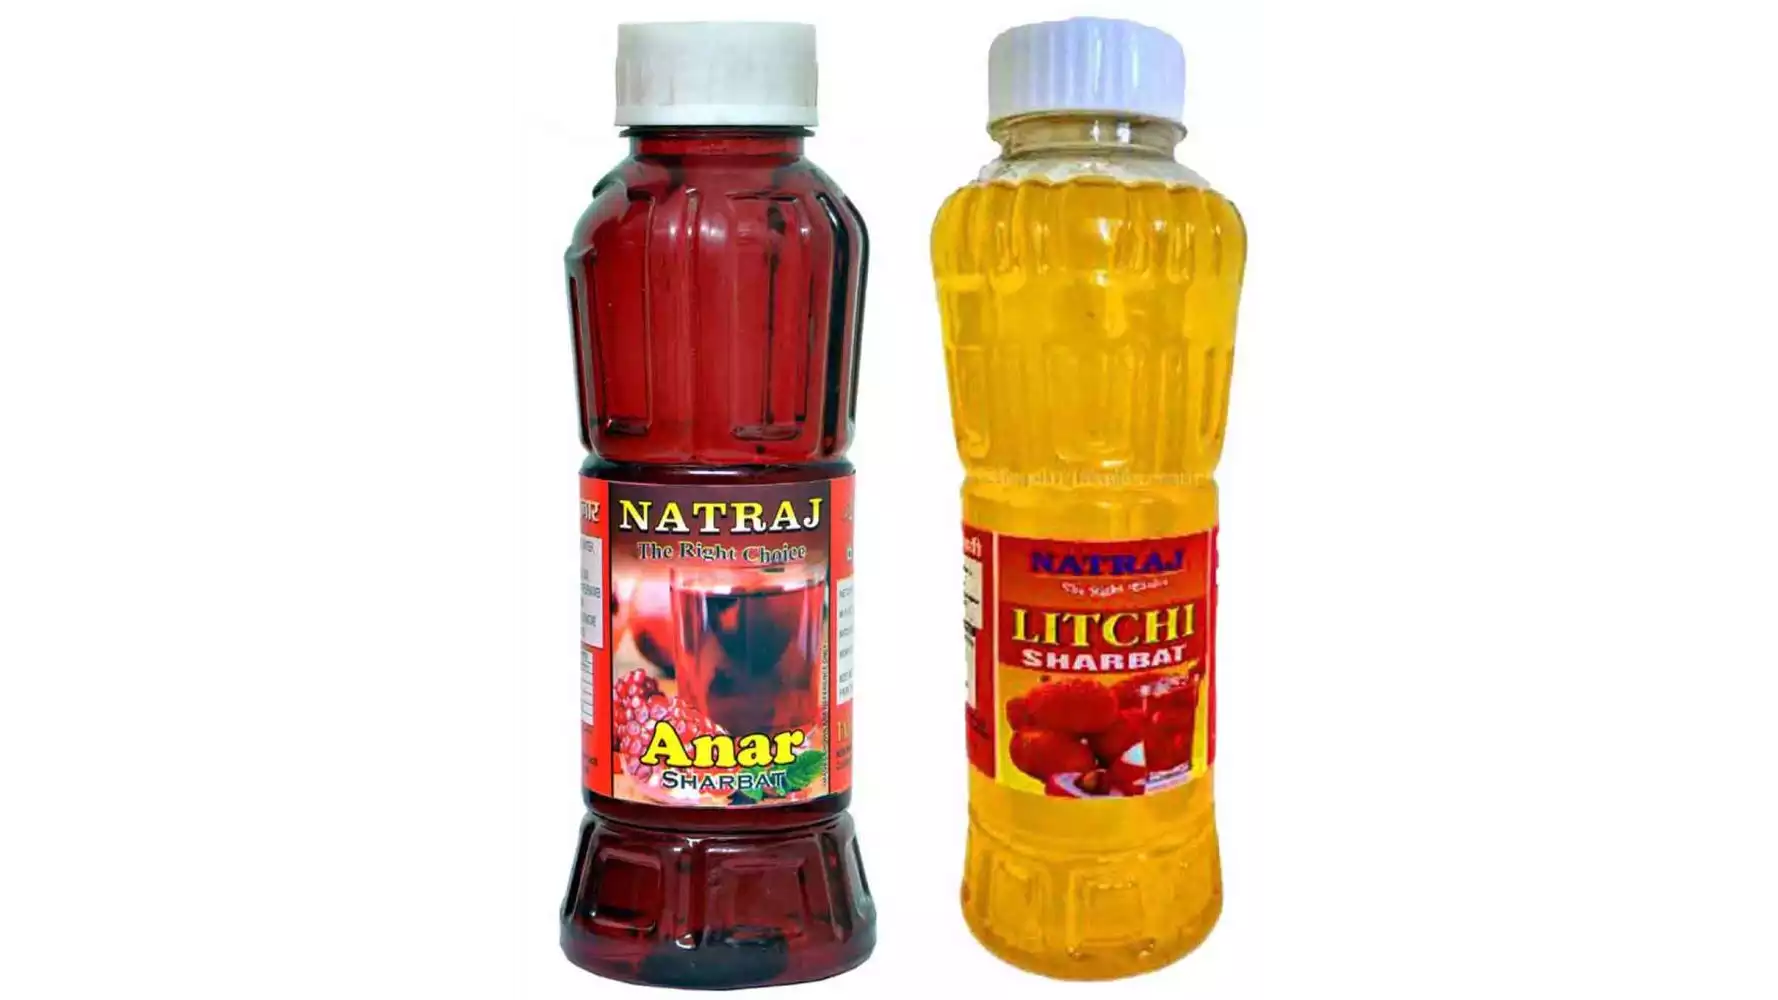 Natraj Anar & Litchi Sharbat Combo (1Pack)